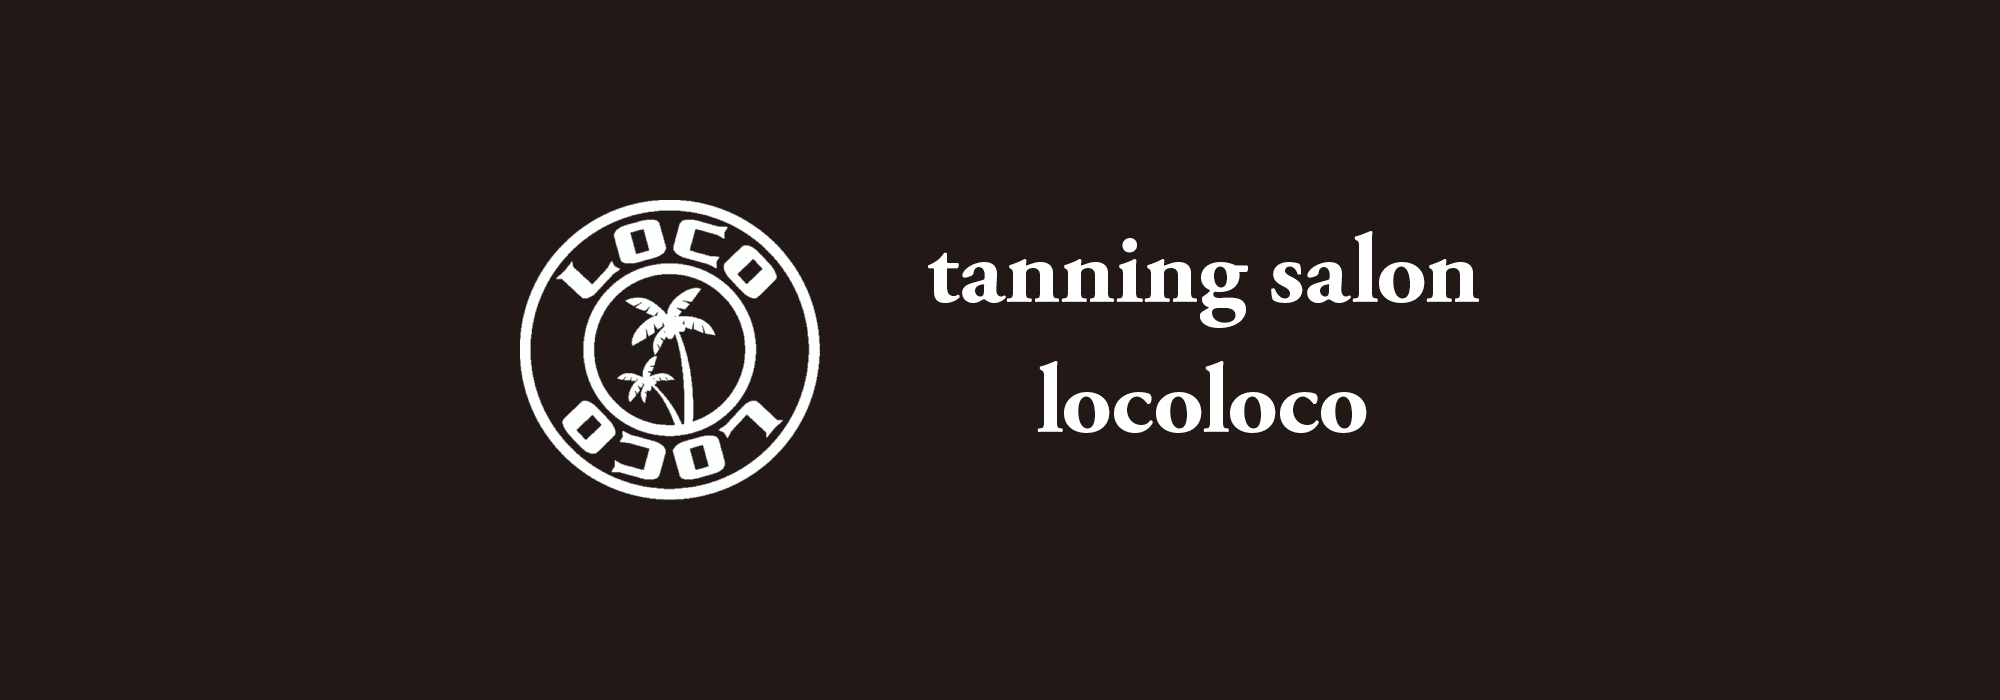 tanning salon locoloco